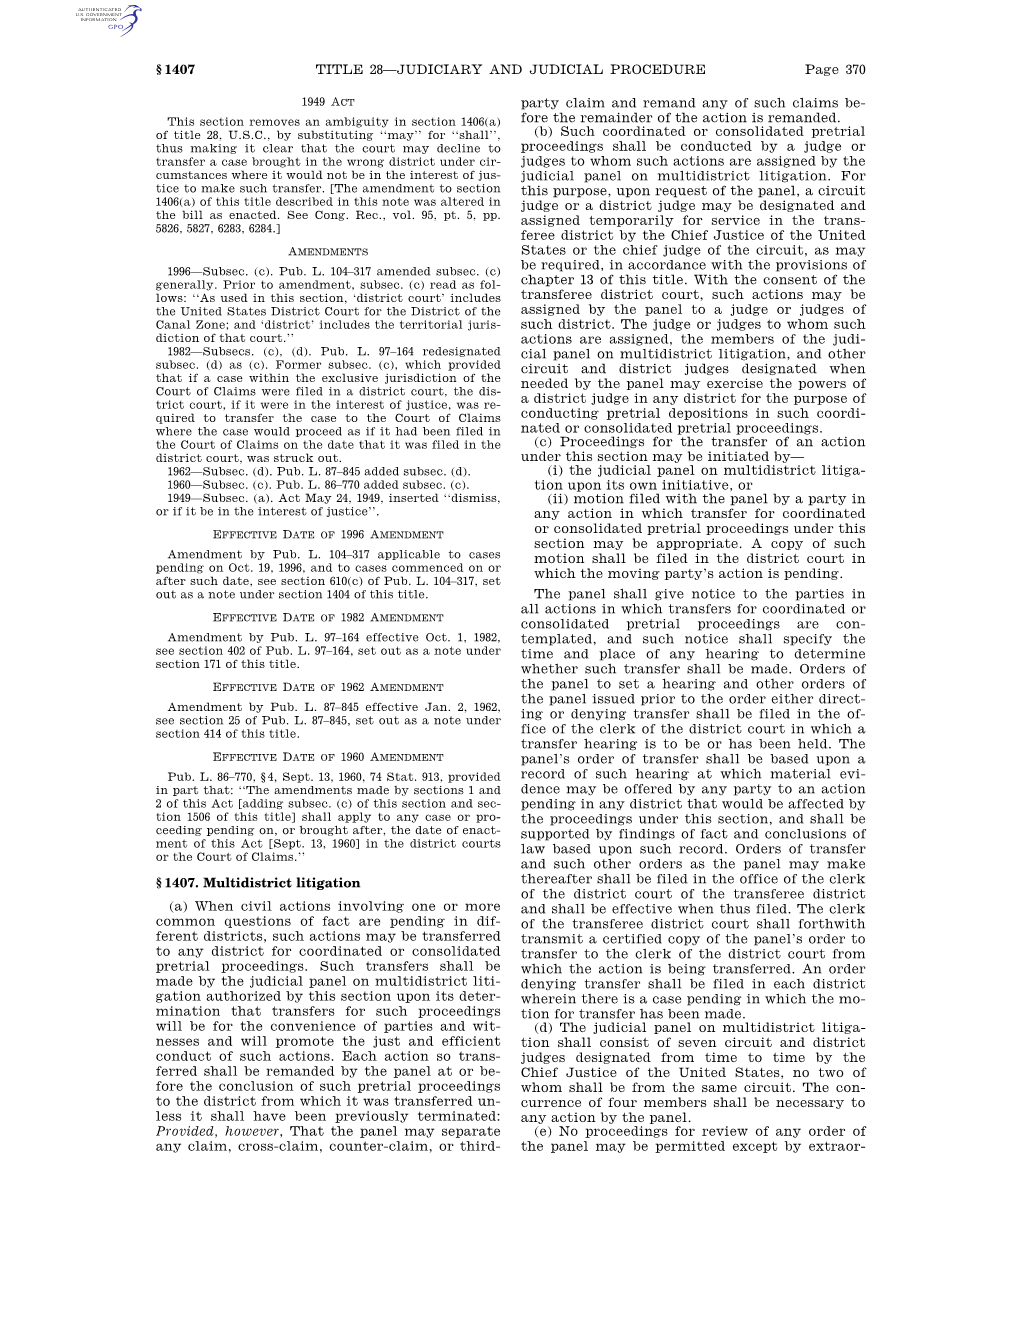 Page 370 TITLE 28—JUDICIARY and JUDICIAL PROCEDURE